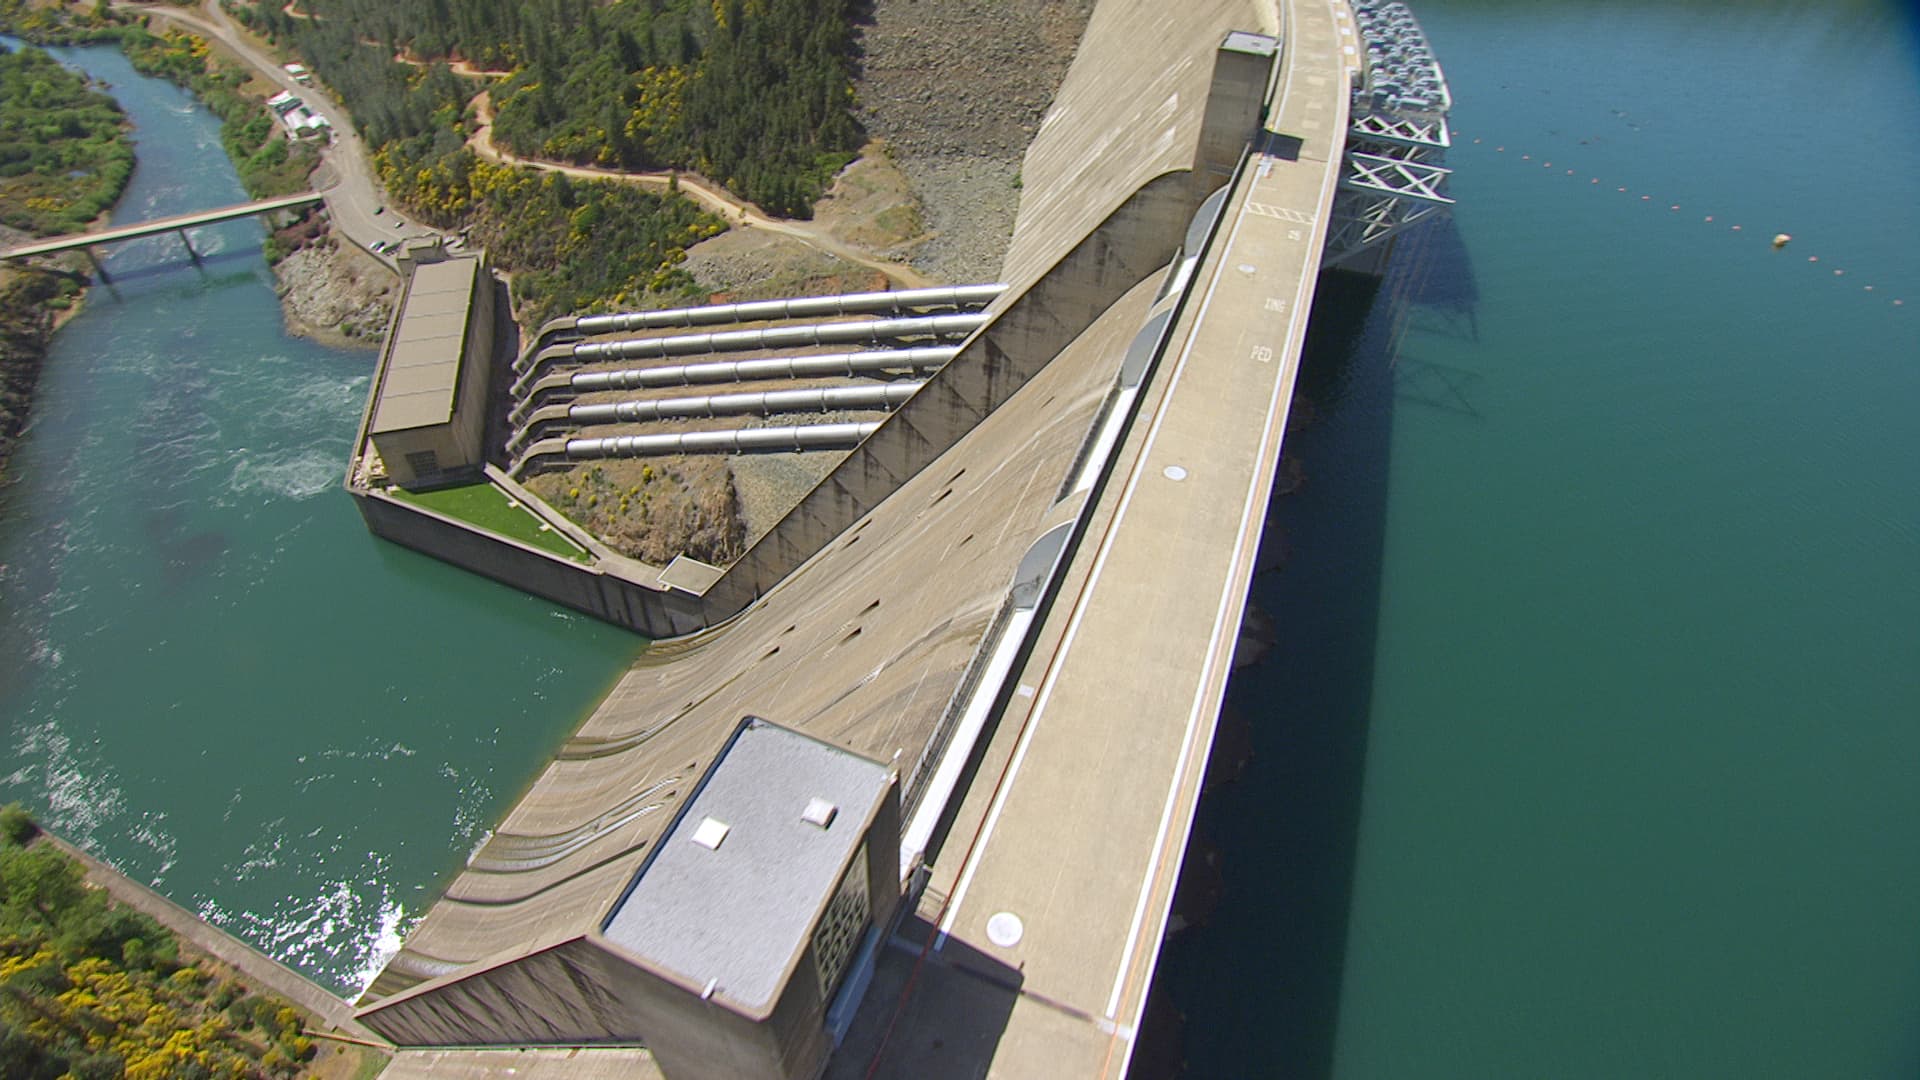 The Shasta Dam in Shasta County, California began generating power in 1945.